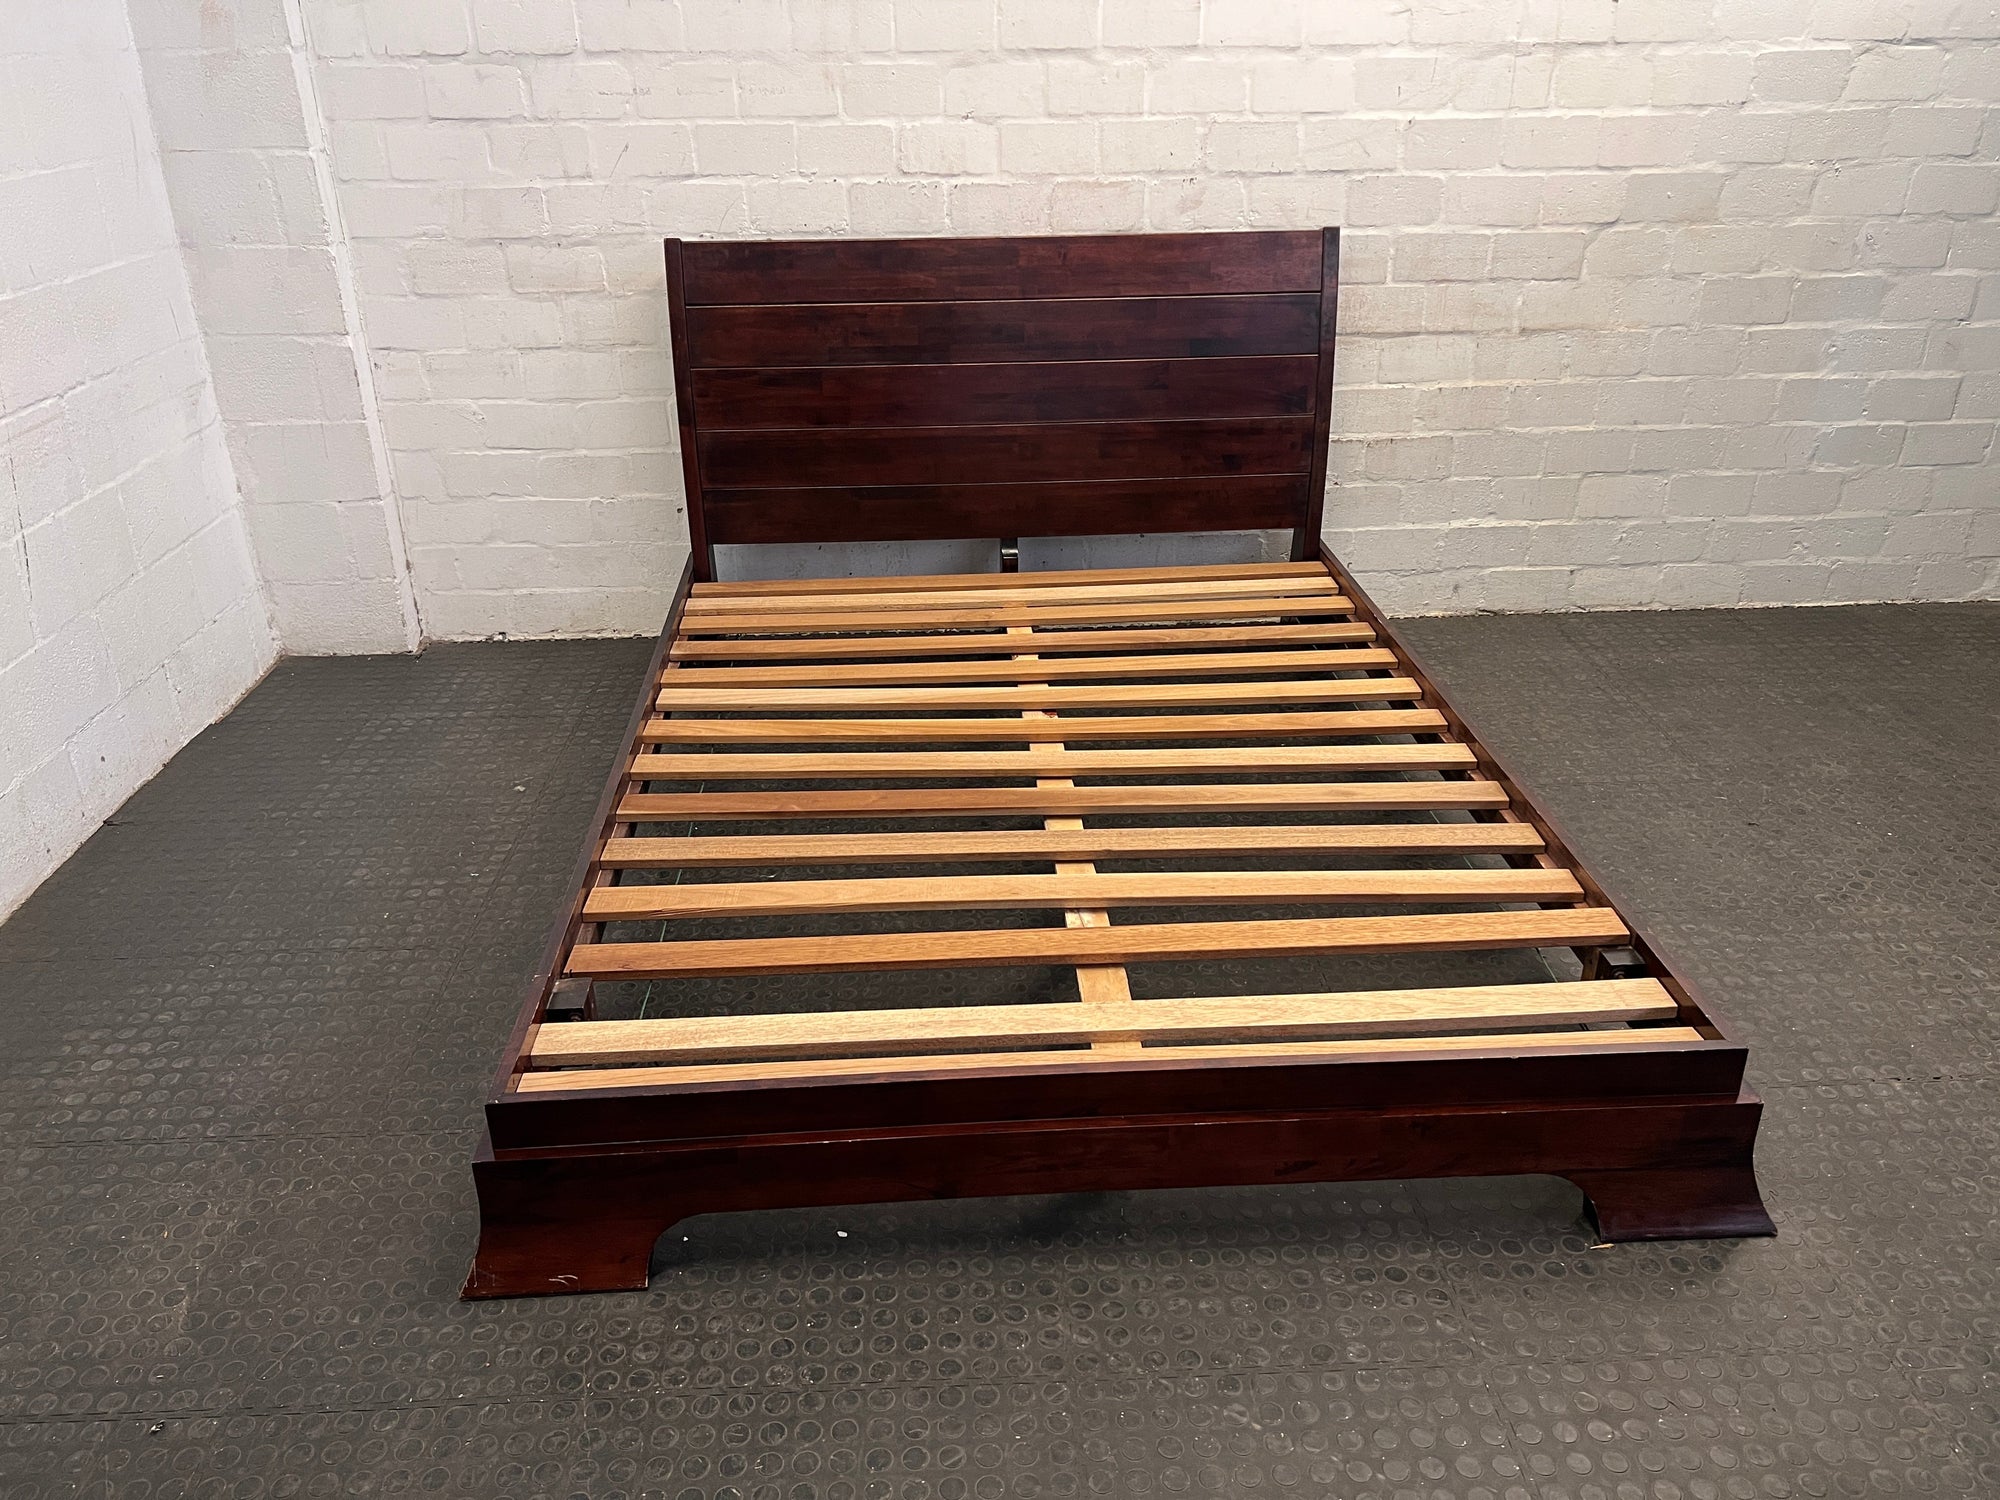 Dark Wood Double Sleigh Bed